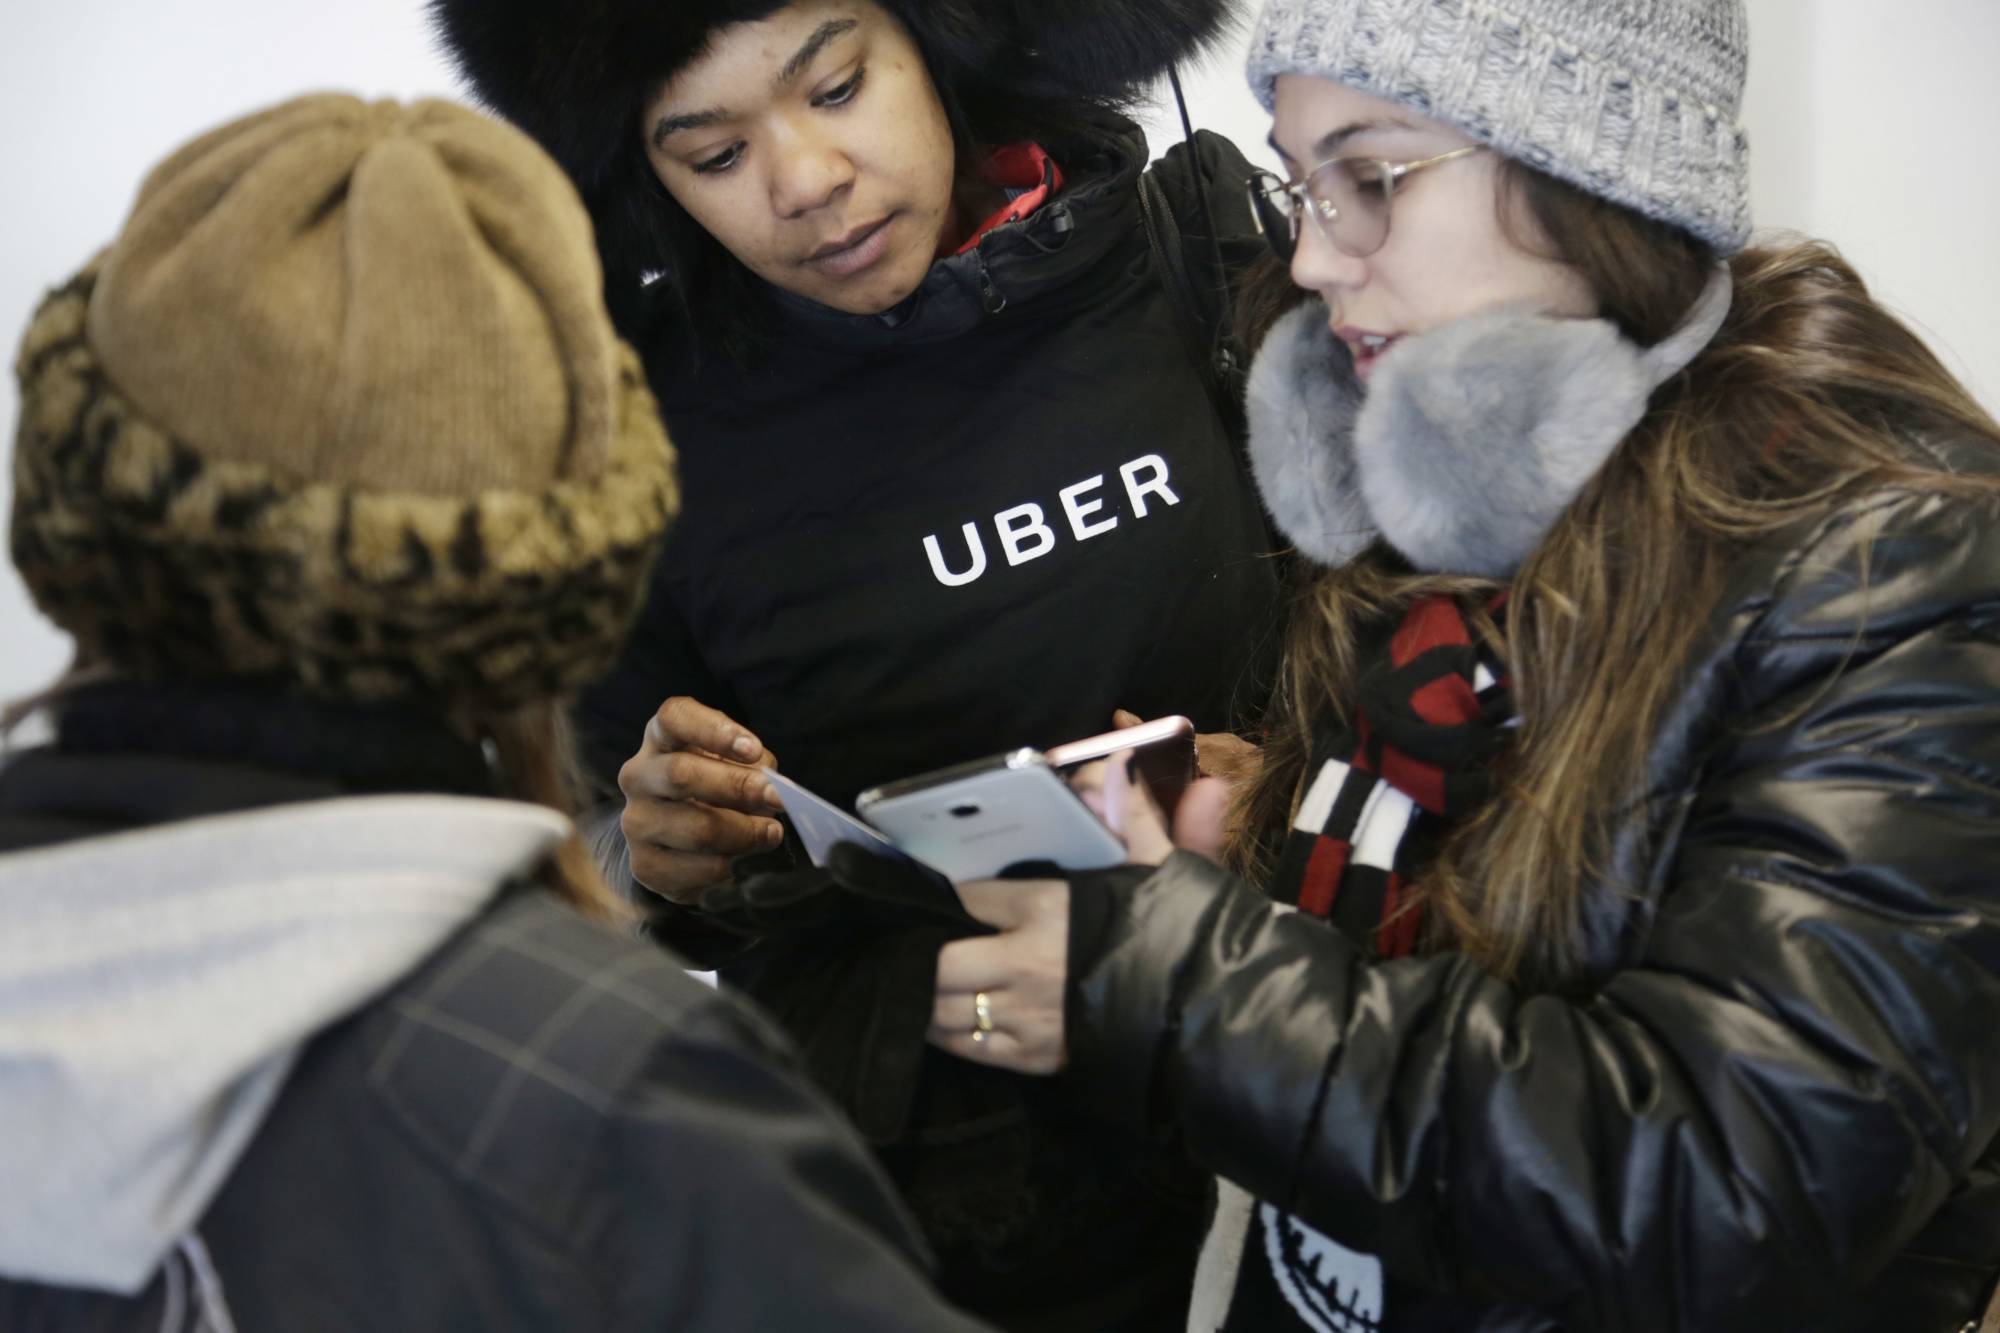 Uber diversity: low on women, like other tech companies